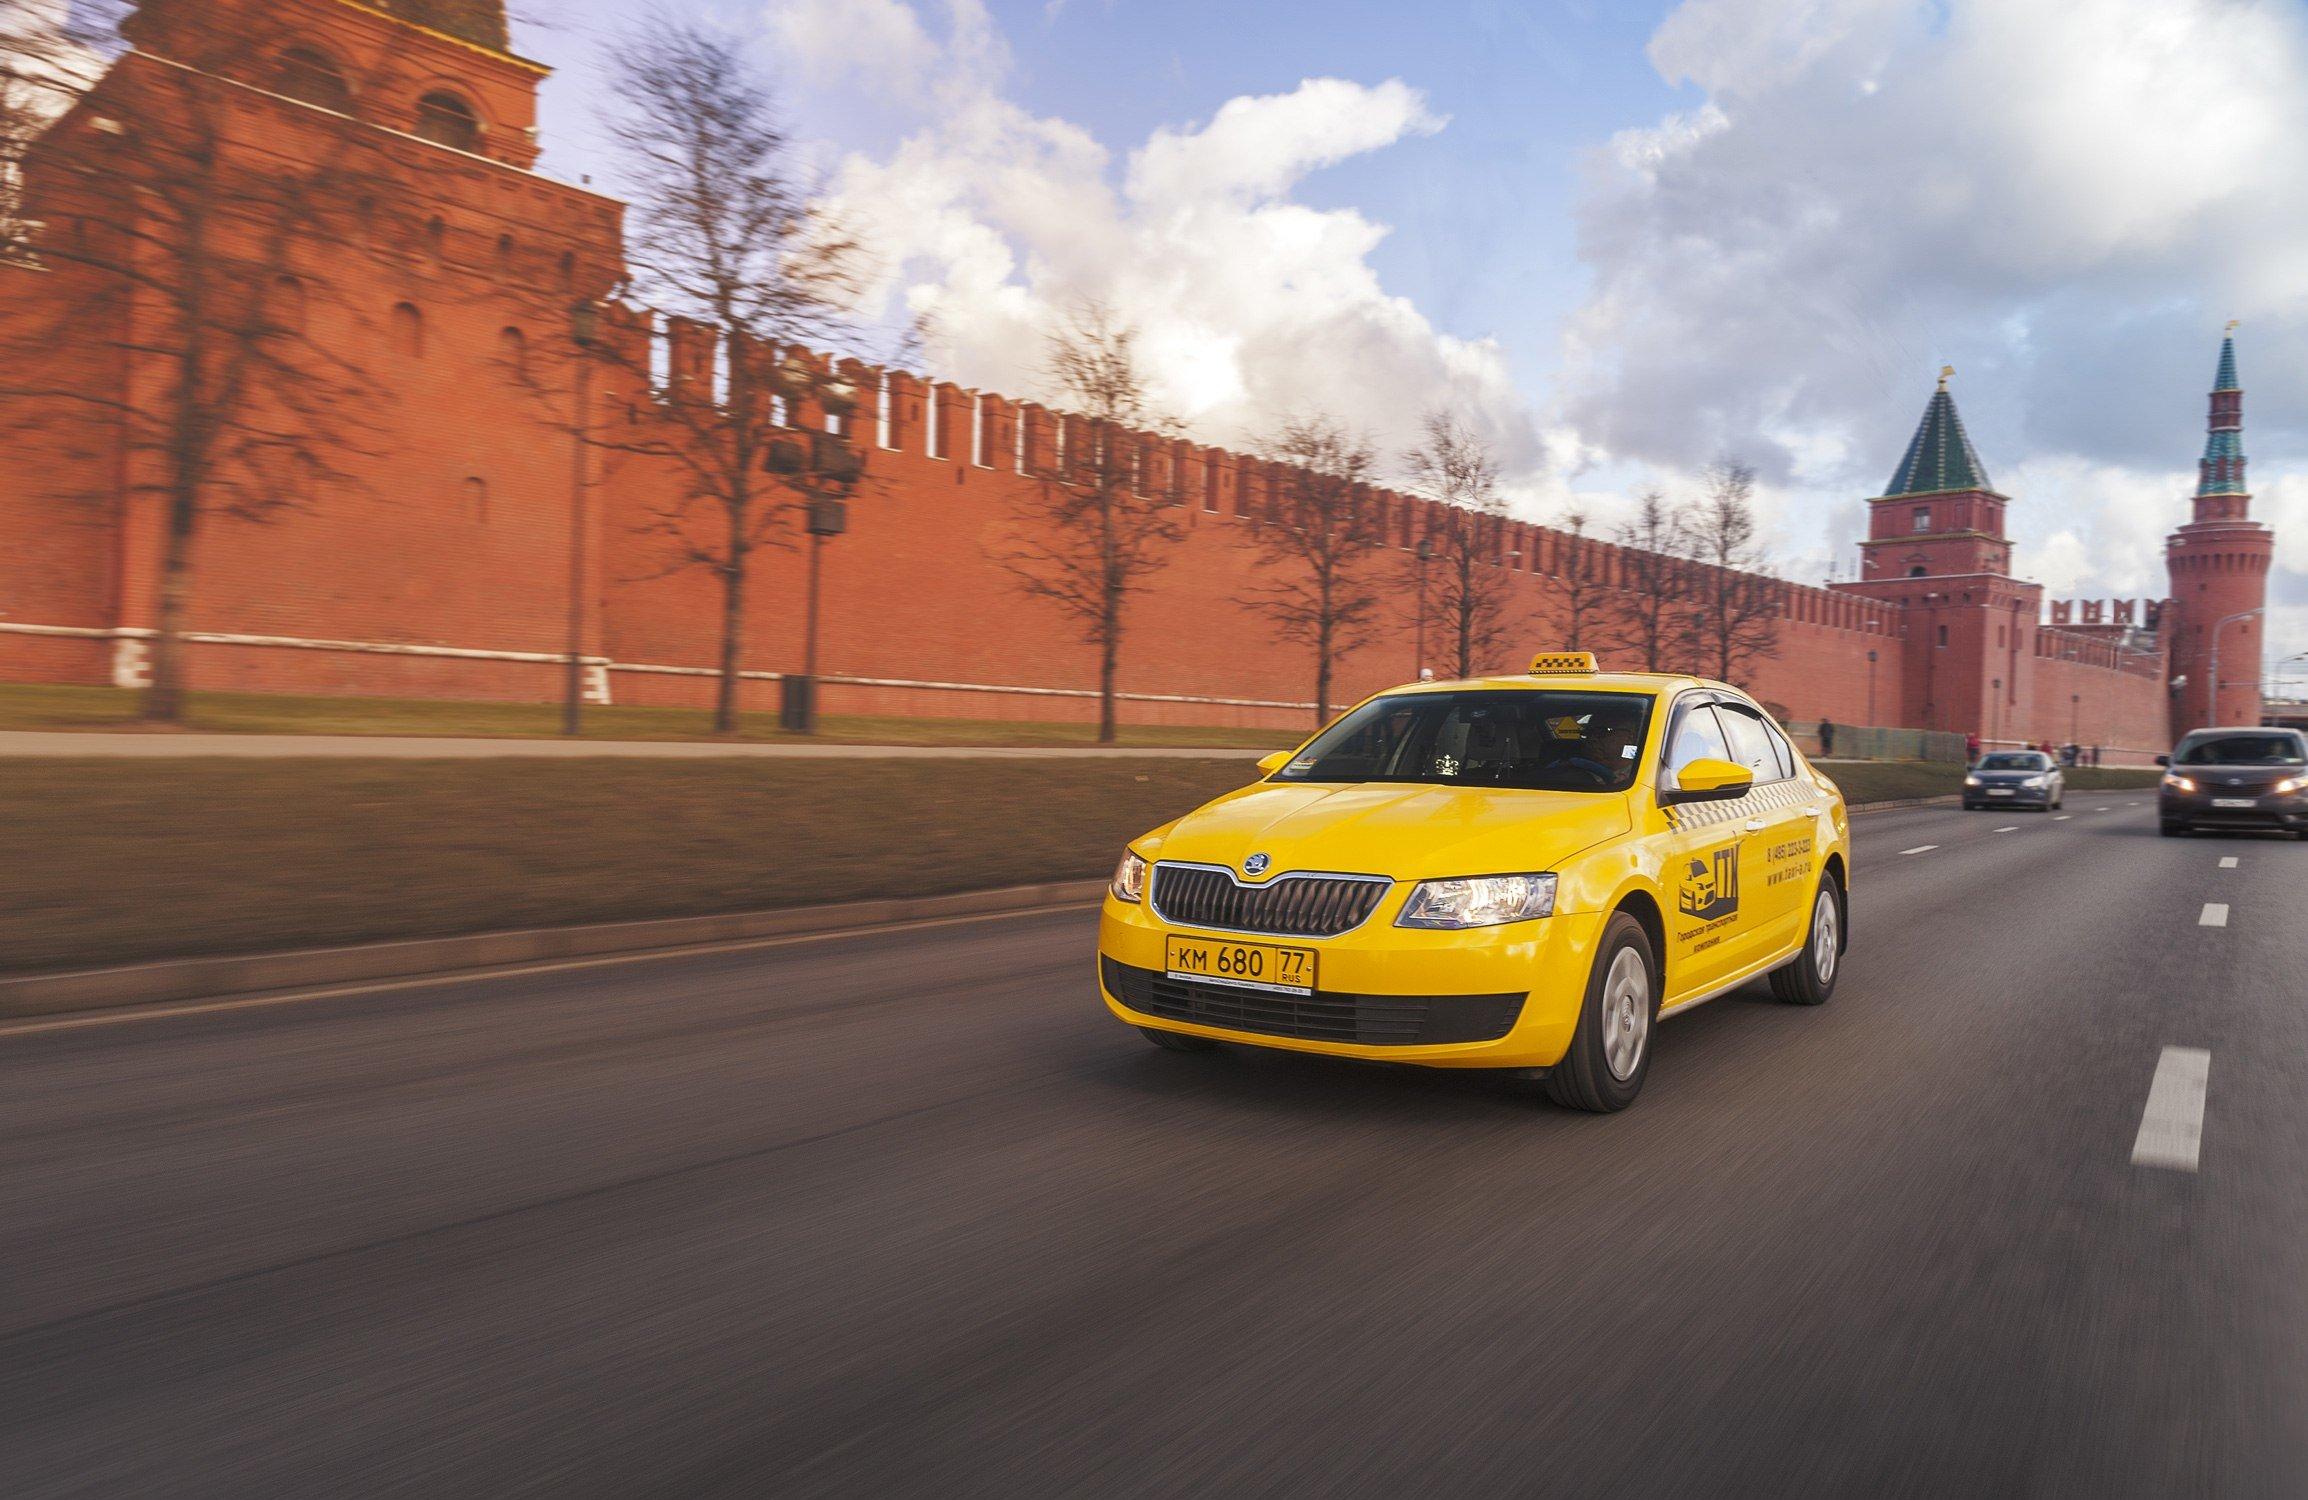 Таксомотор москва. Машина "такси". Автомобиль «такси». Таха машина. Желтое такси.